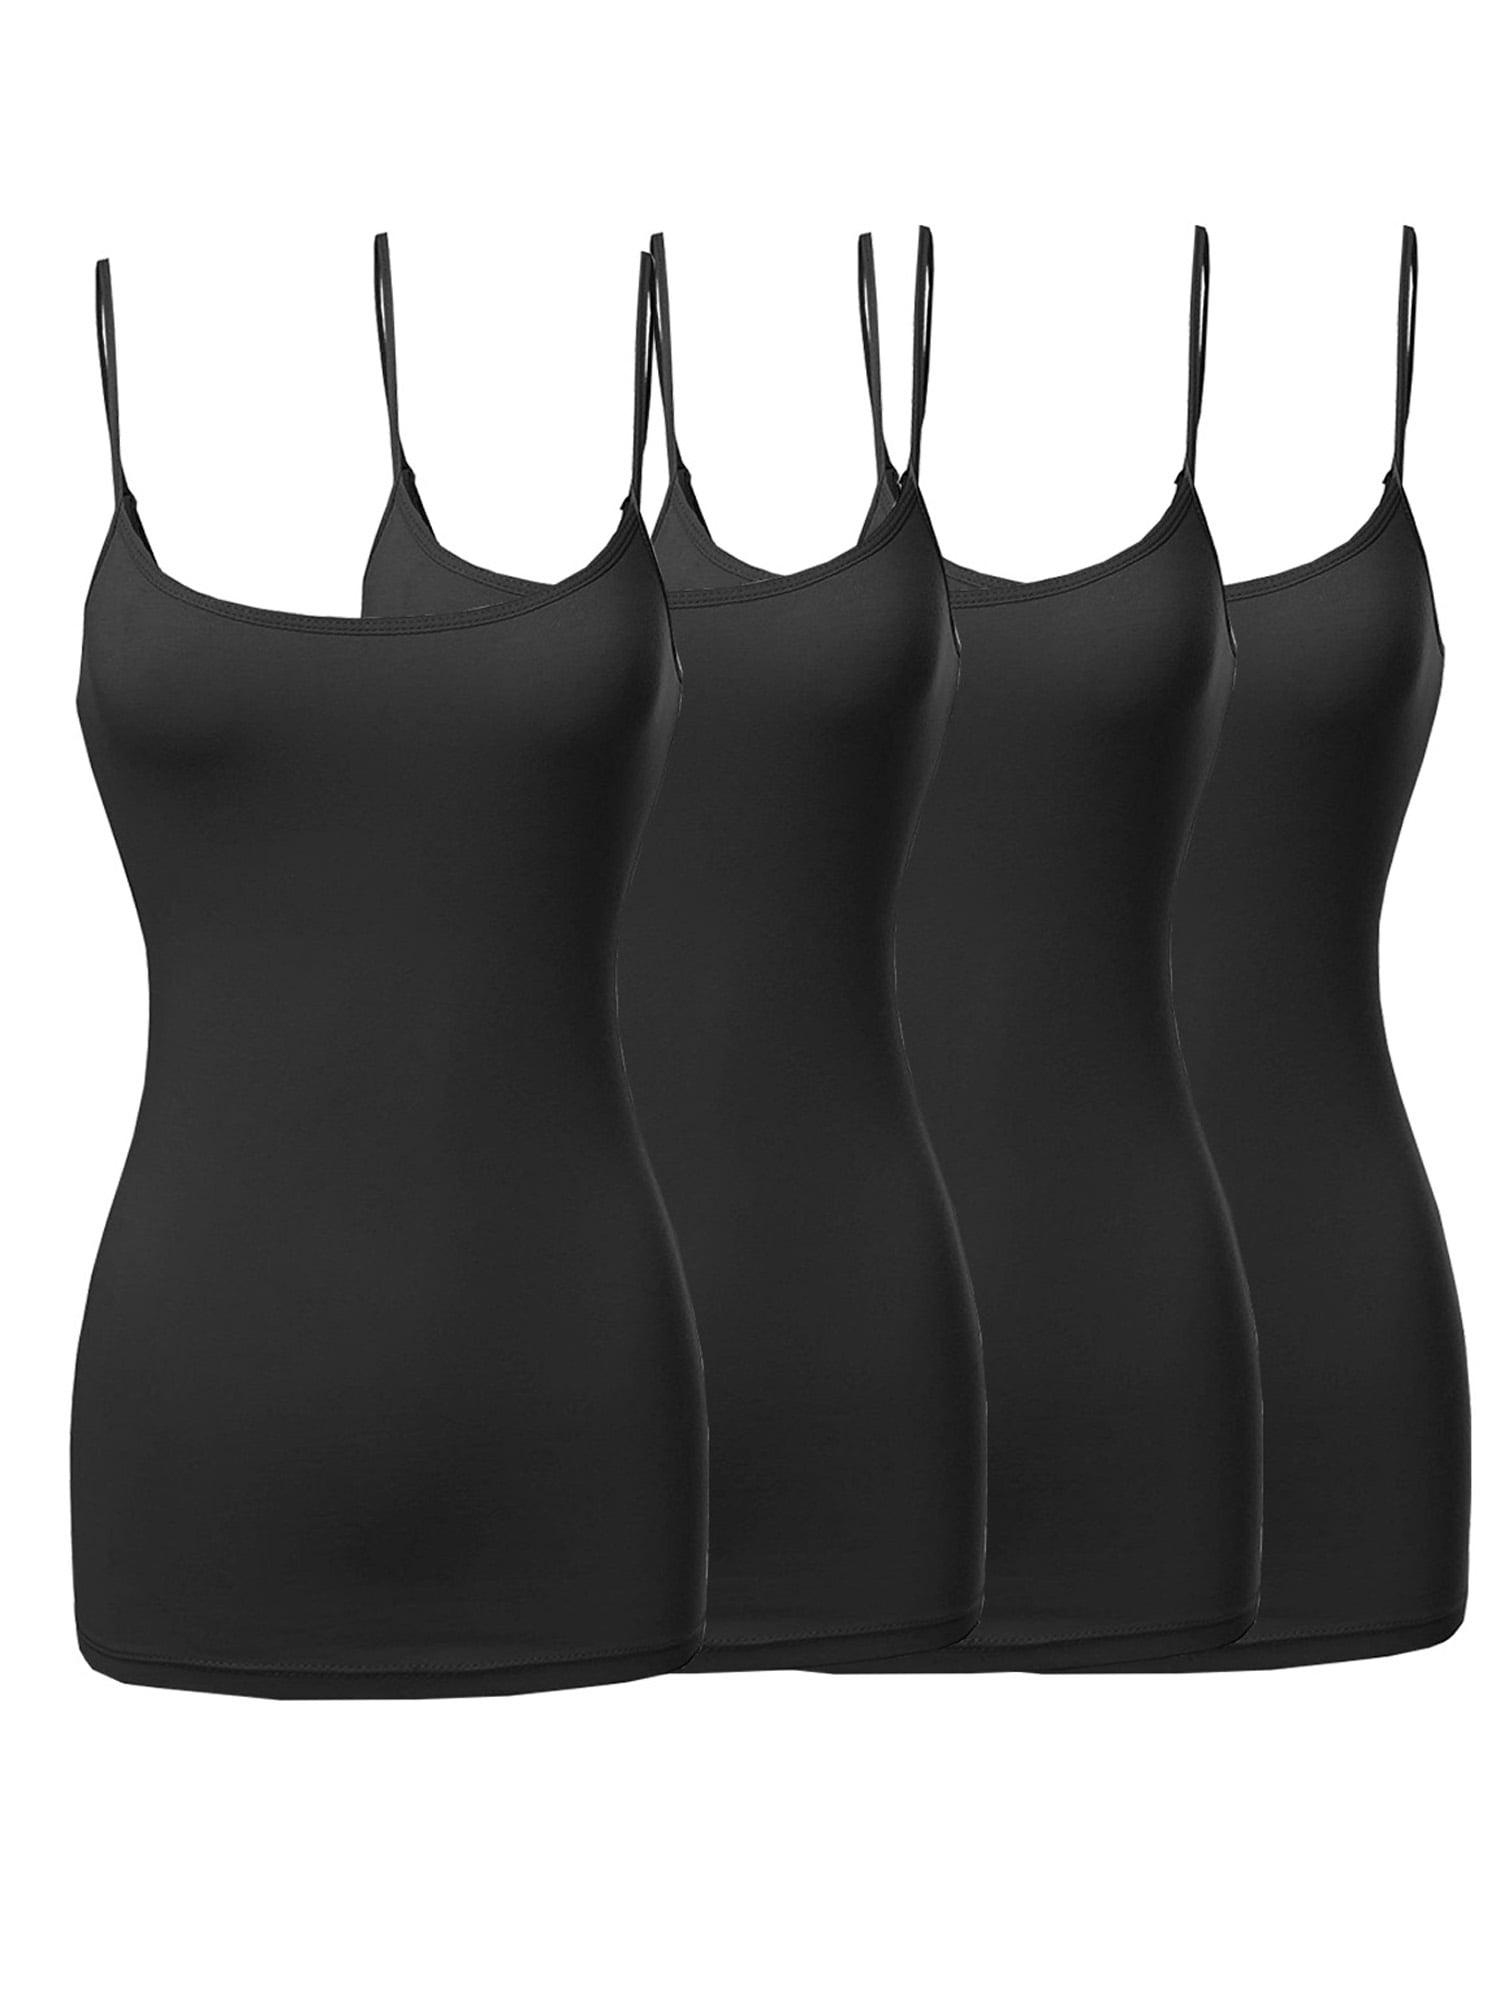 Womens & Juniors Basic Solid Long Length Adjustable Spaghetti Strap  Camisole Tank Top (4PK - Black/Black/Black/Black, S) 